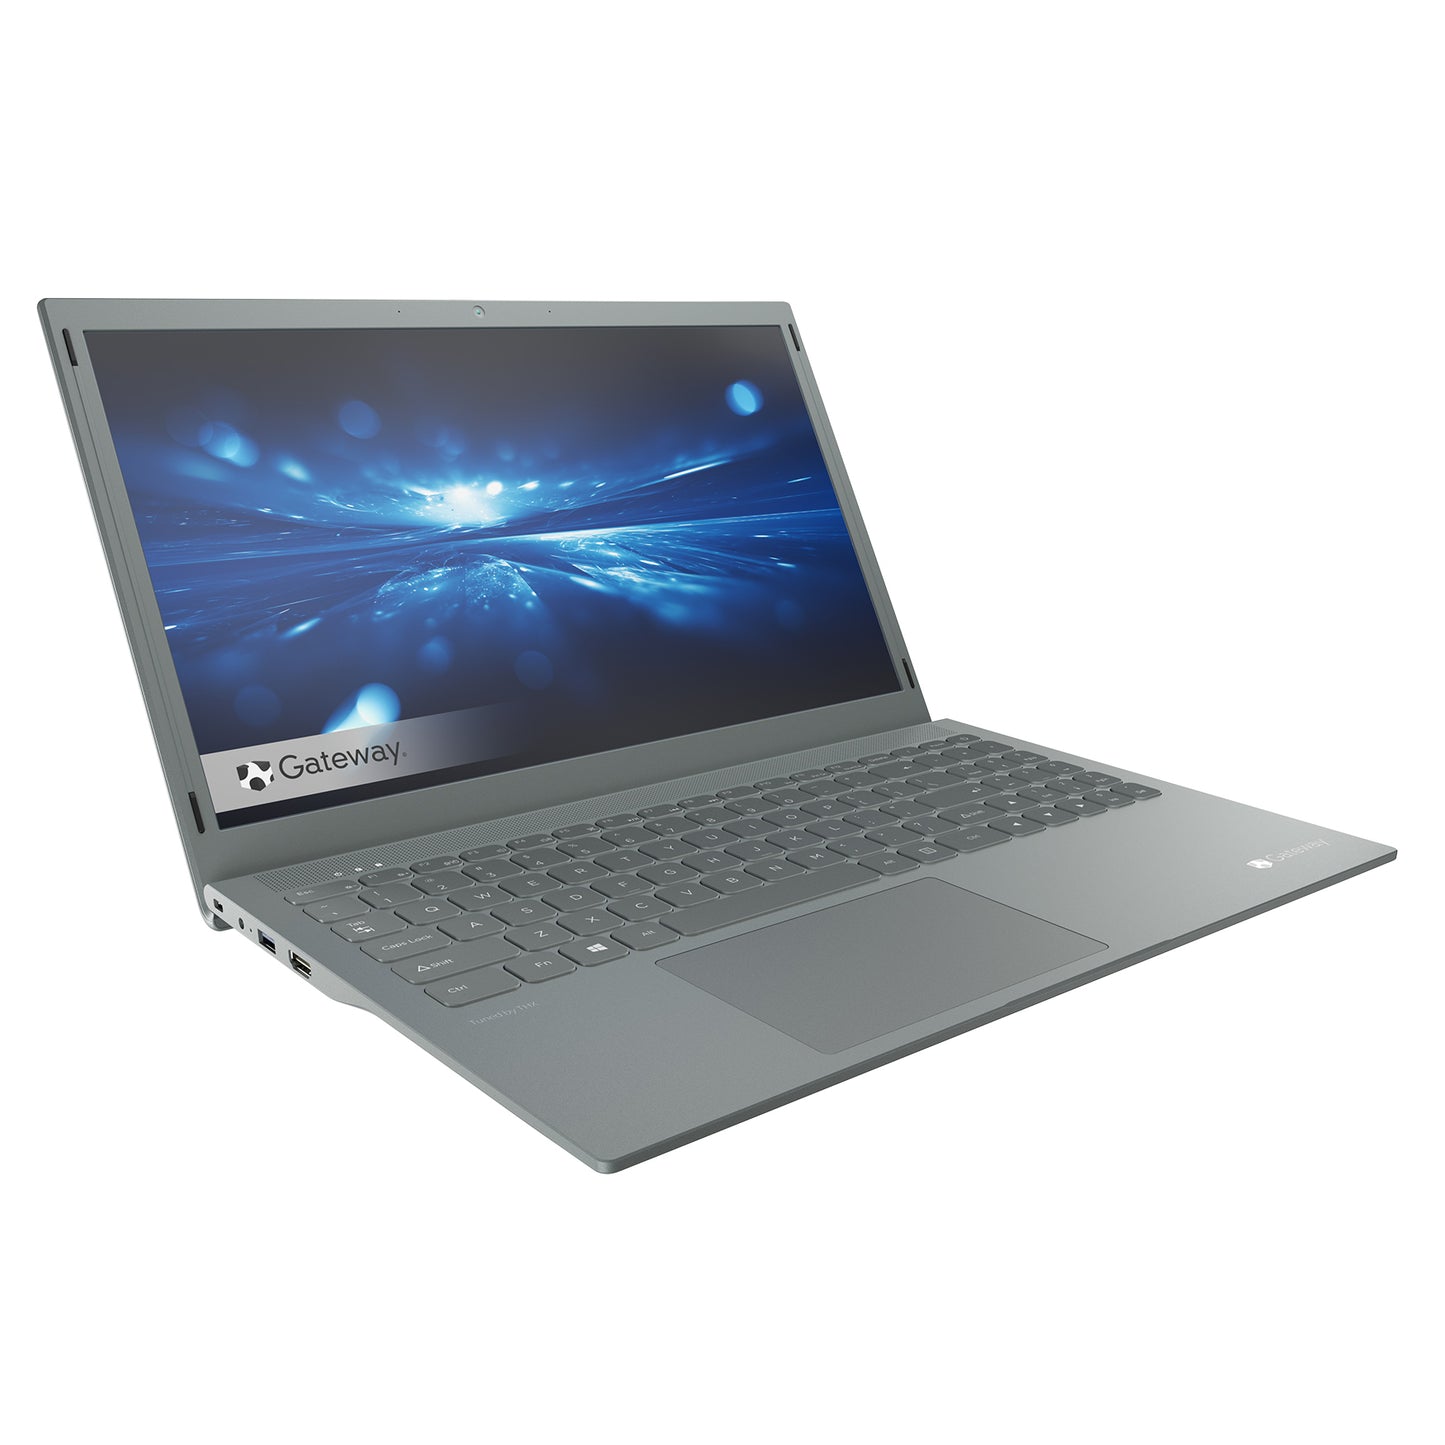 Acer Gateway GWTN156-11BK Pentium N5030 15.6" Fhd Laptop (Brand New)